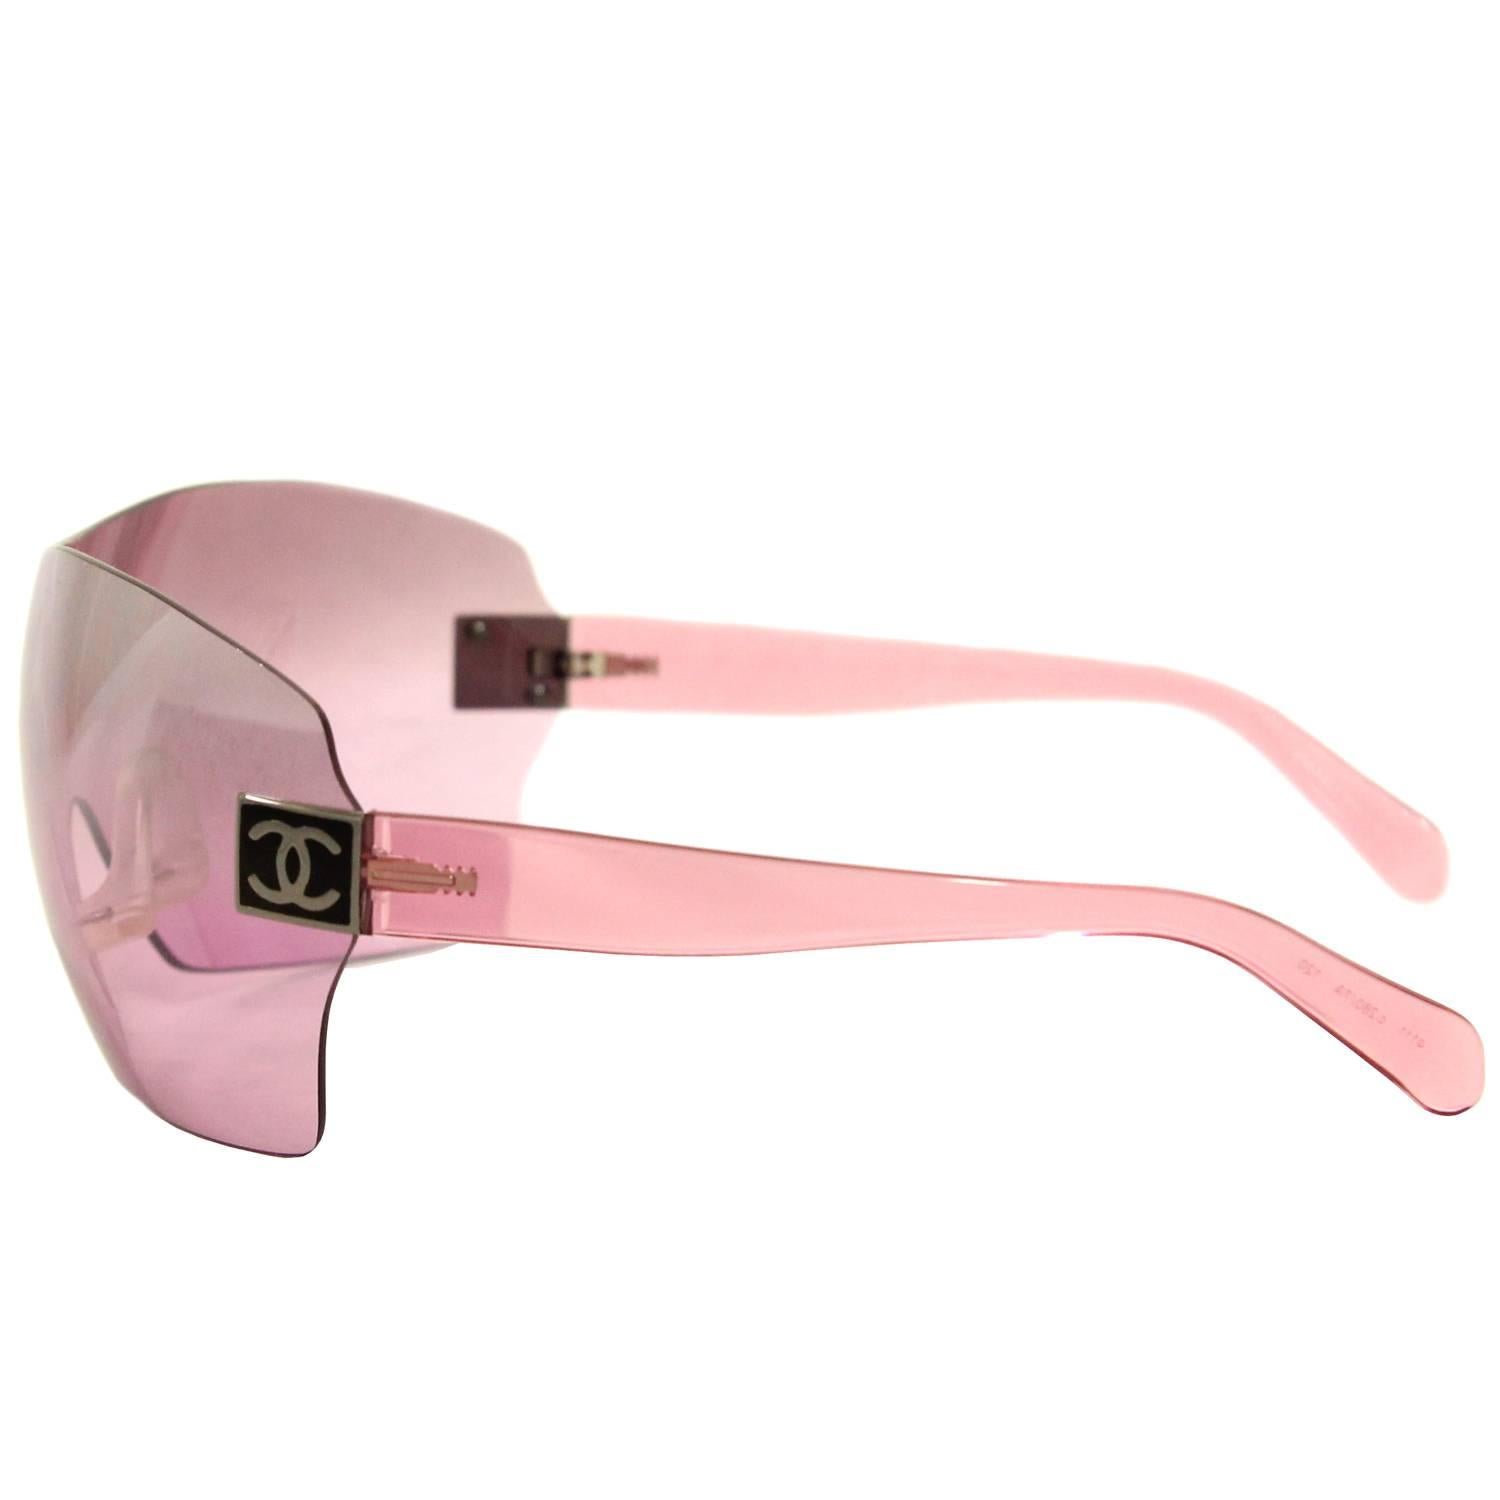 2000s pink sunglasses